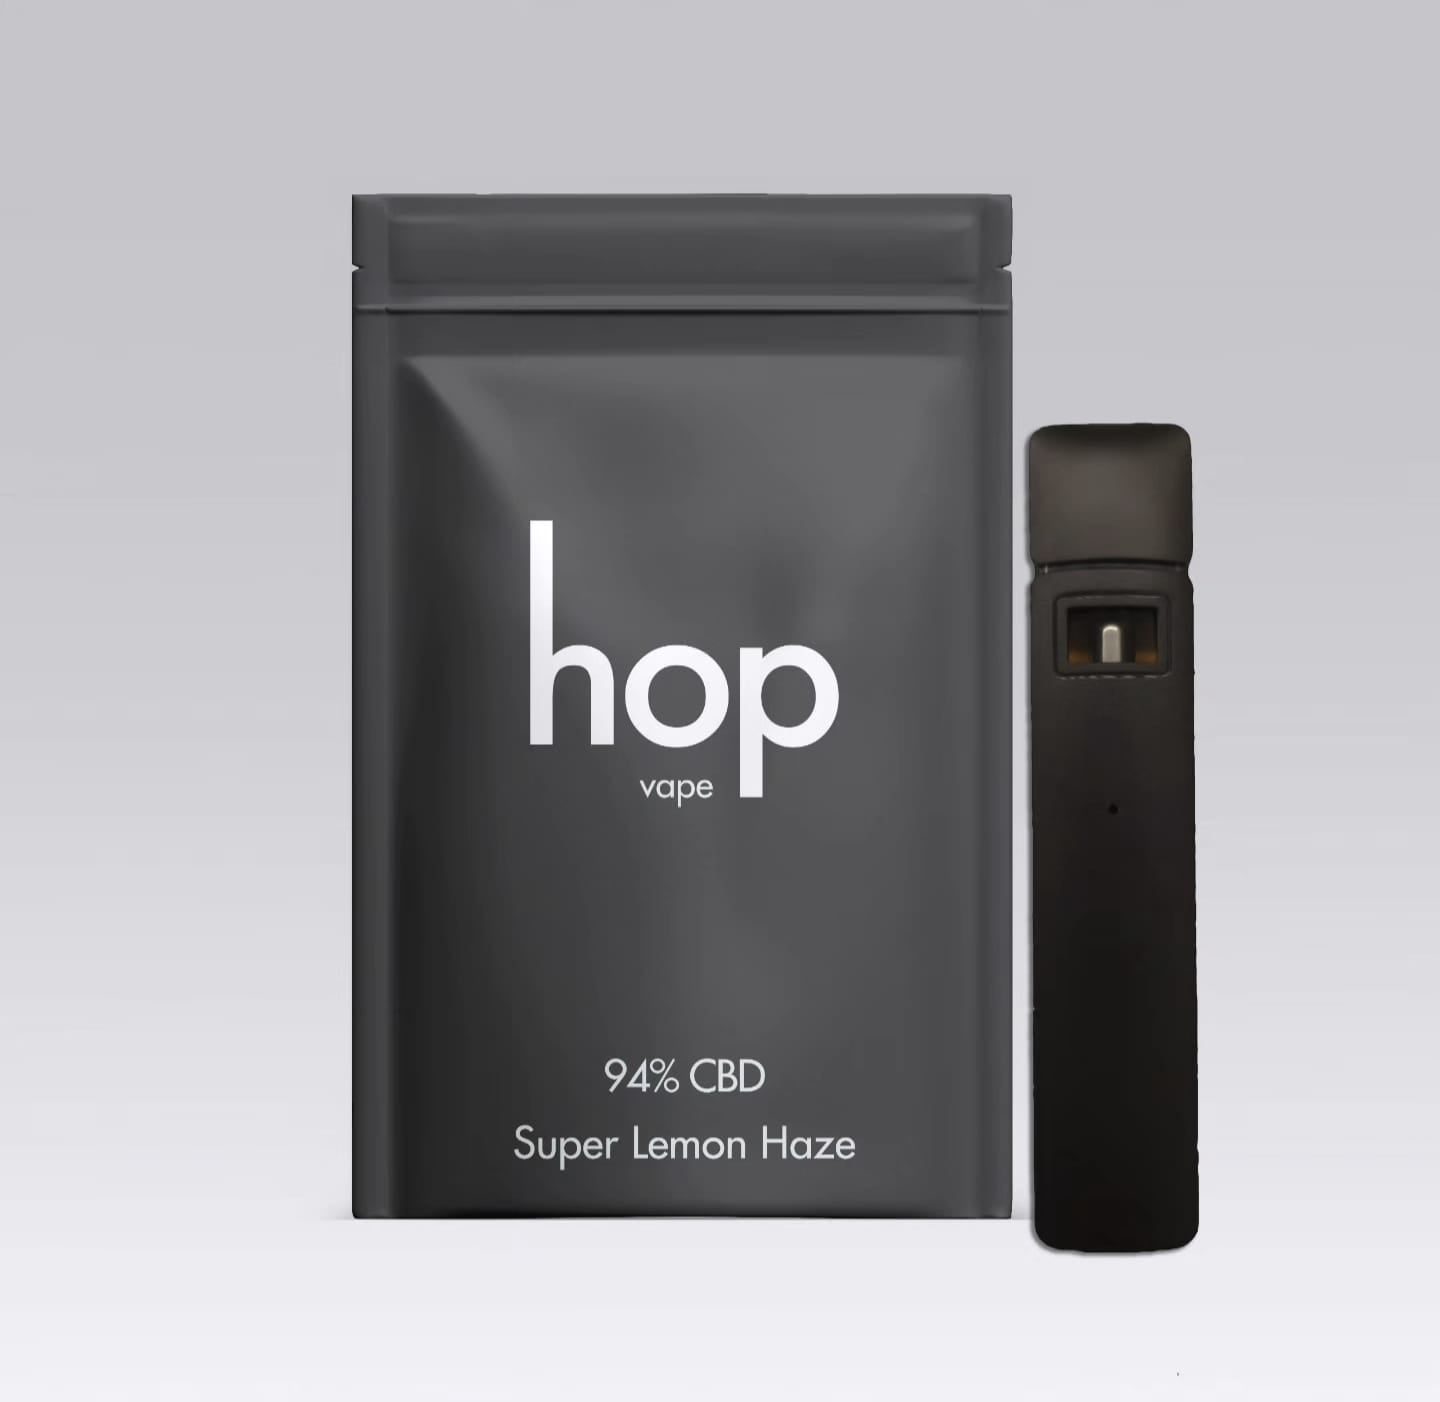 vape negro con bolsa negra marca hop 94% cbd super lemon haze